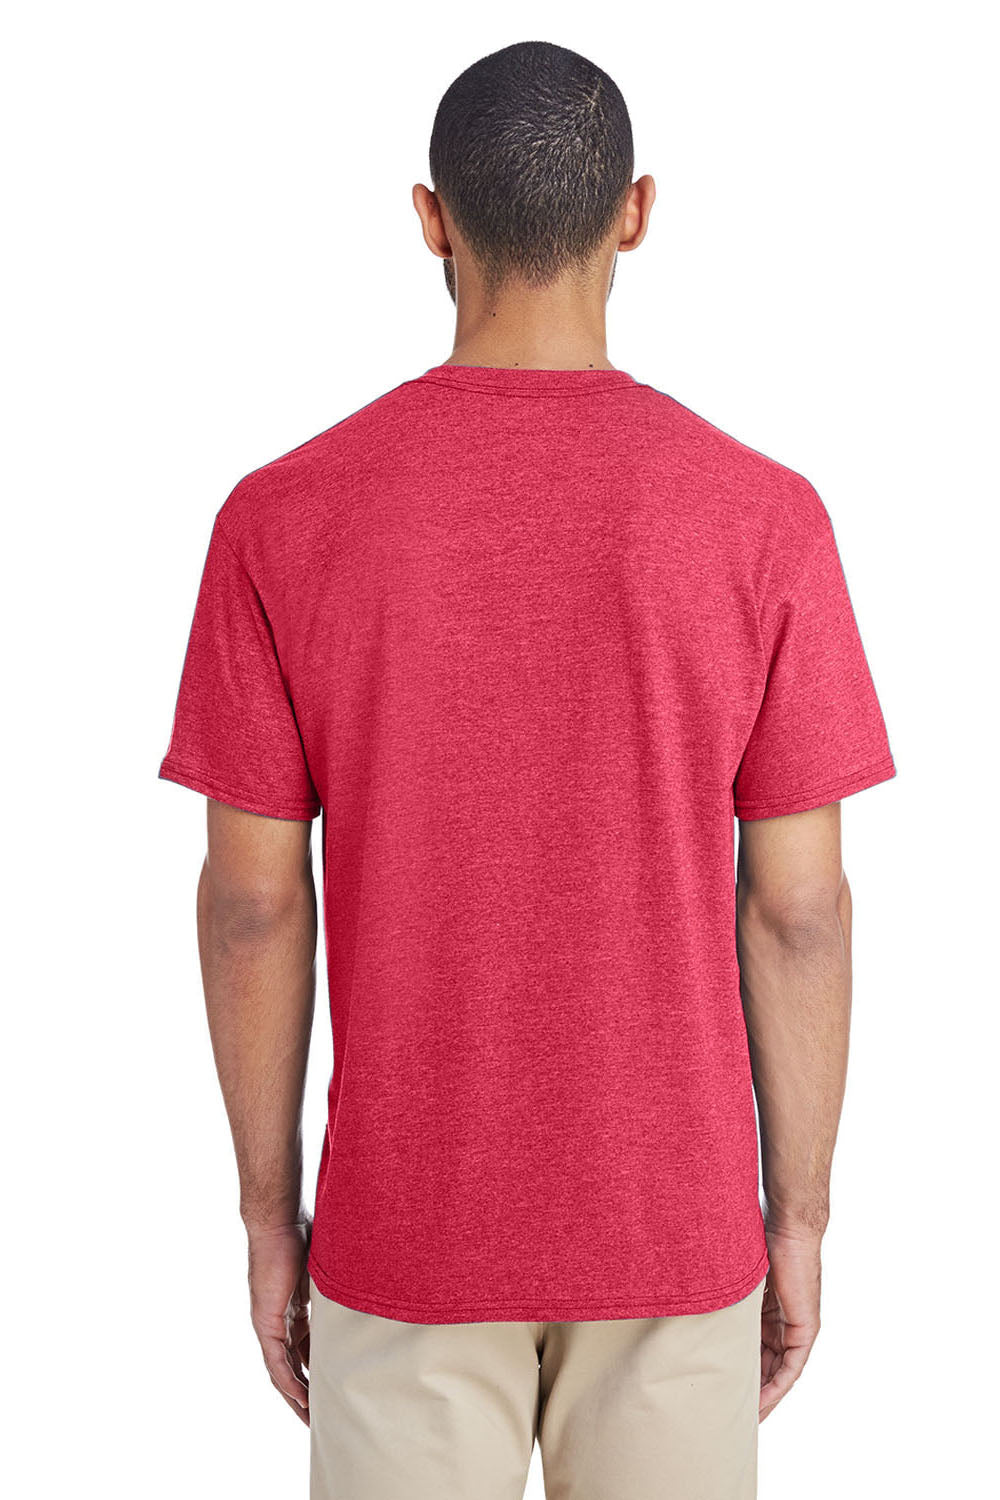 Gildan G800 Mens DryBlend Moisture Wicking Short Sleeve Crewneck T-Shirt Heather Scarlet Red Back